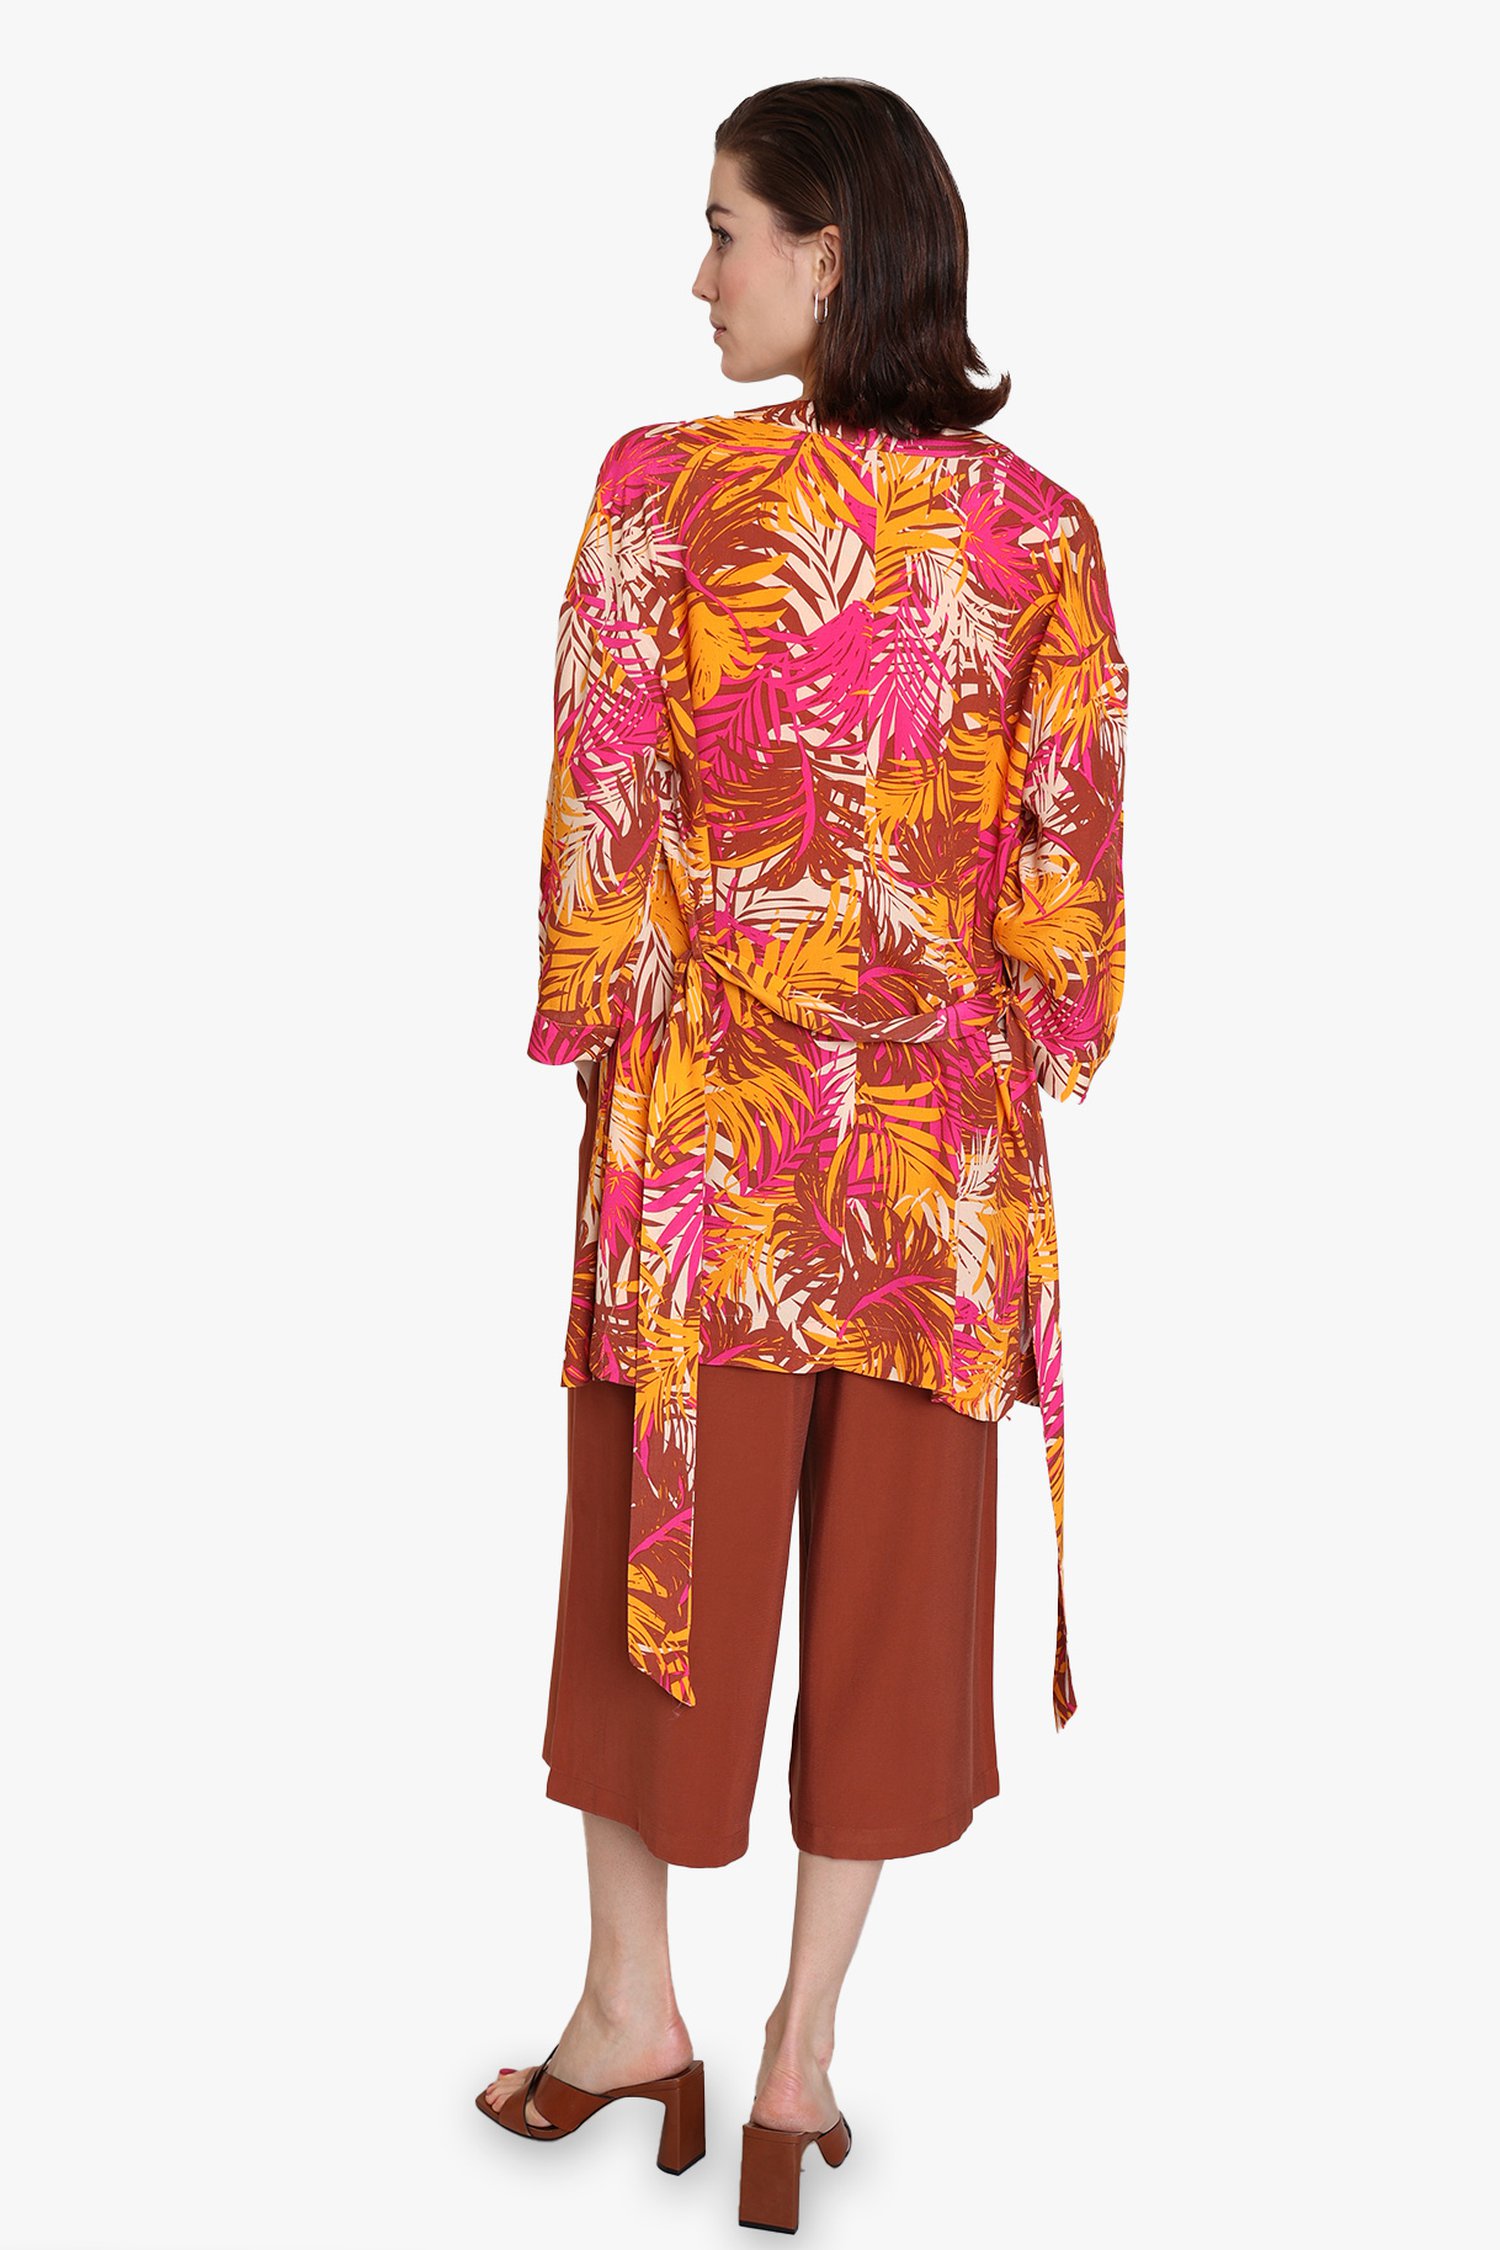 Roze-oranje blouse met bladerprint en striklint van Louise voor Dames